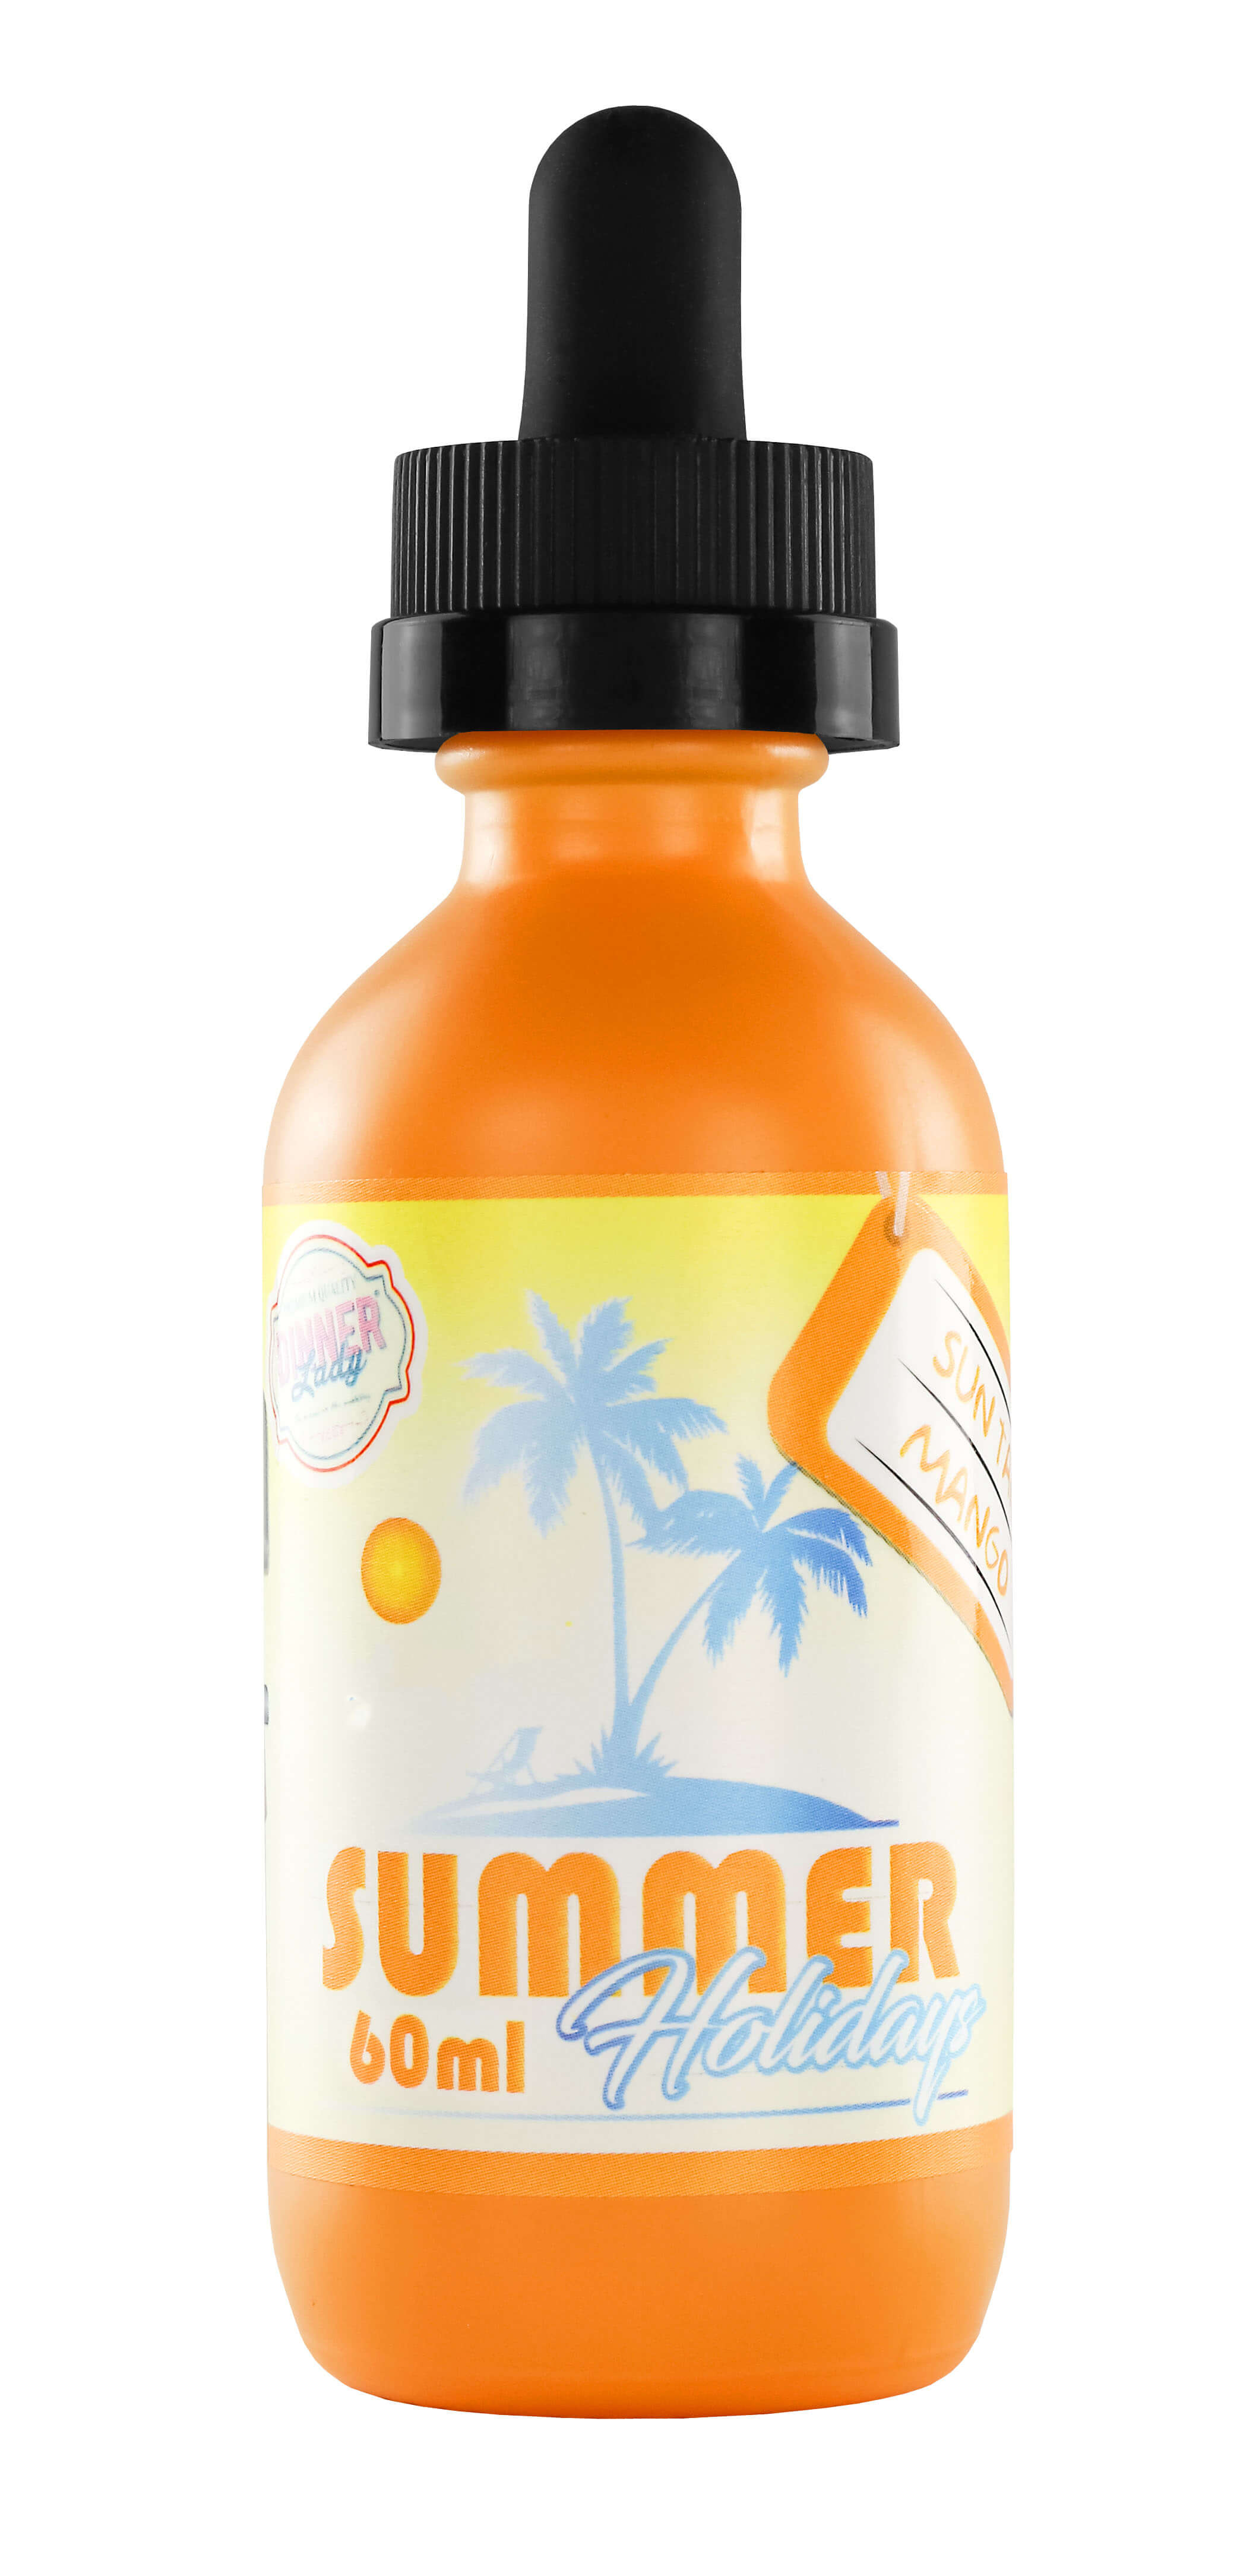 Sun Tan Mango (60ml) - Summer Holidays Liquid - 0mg/ml